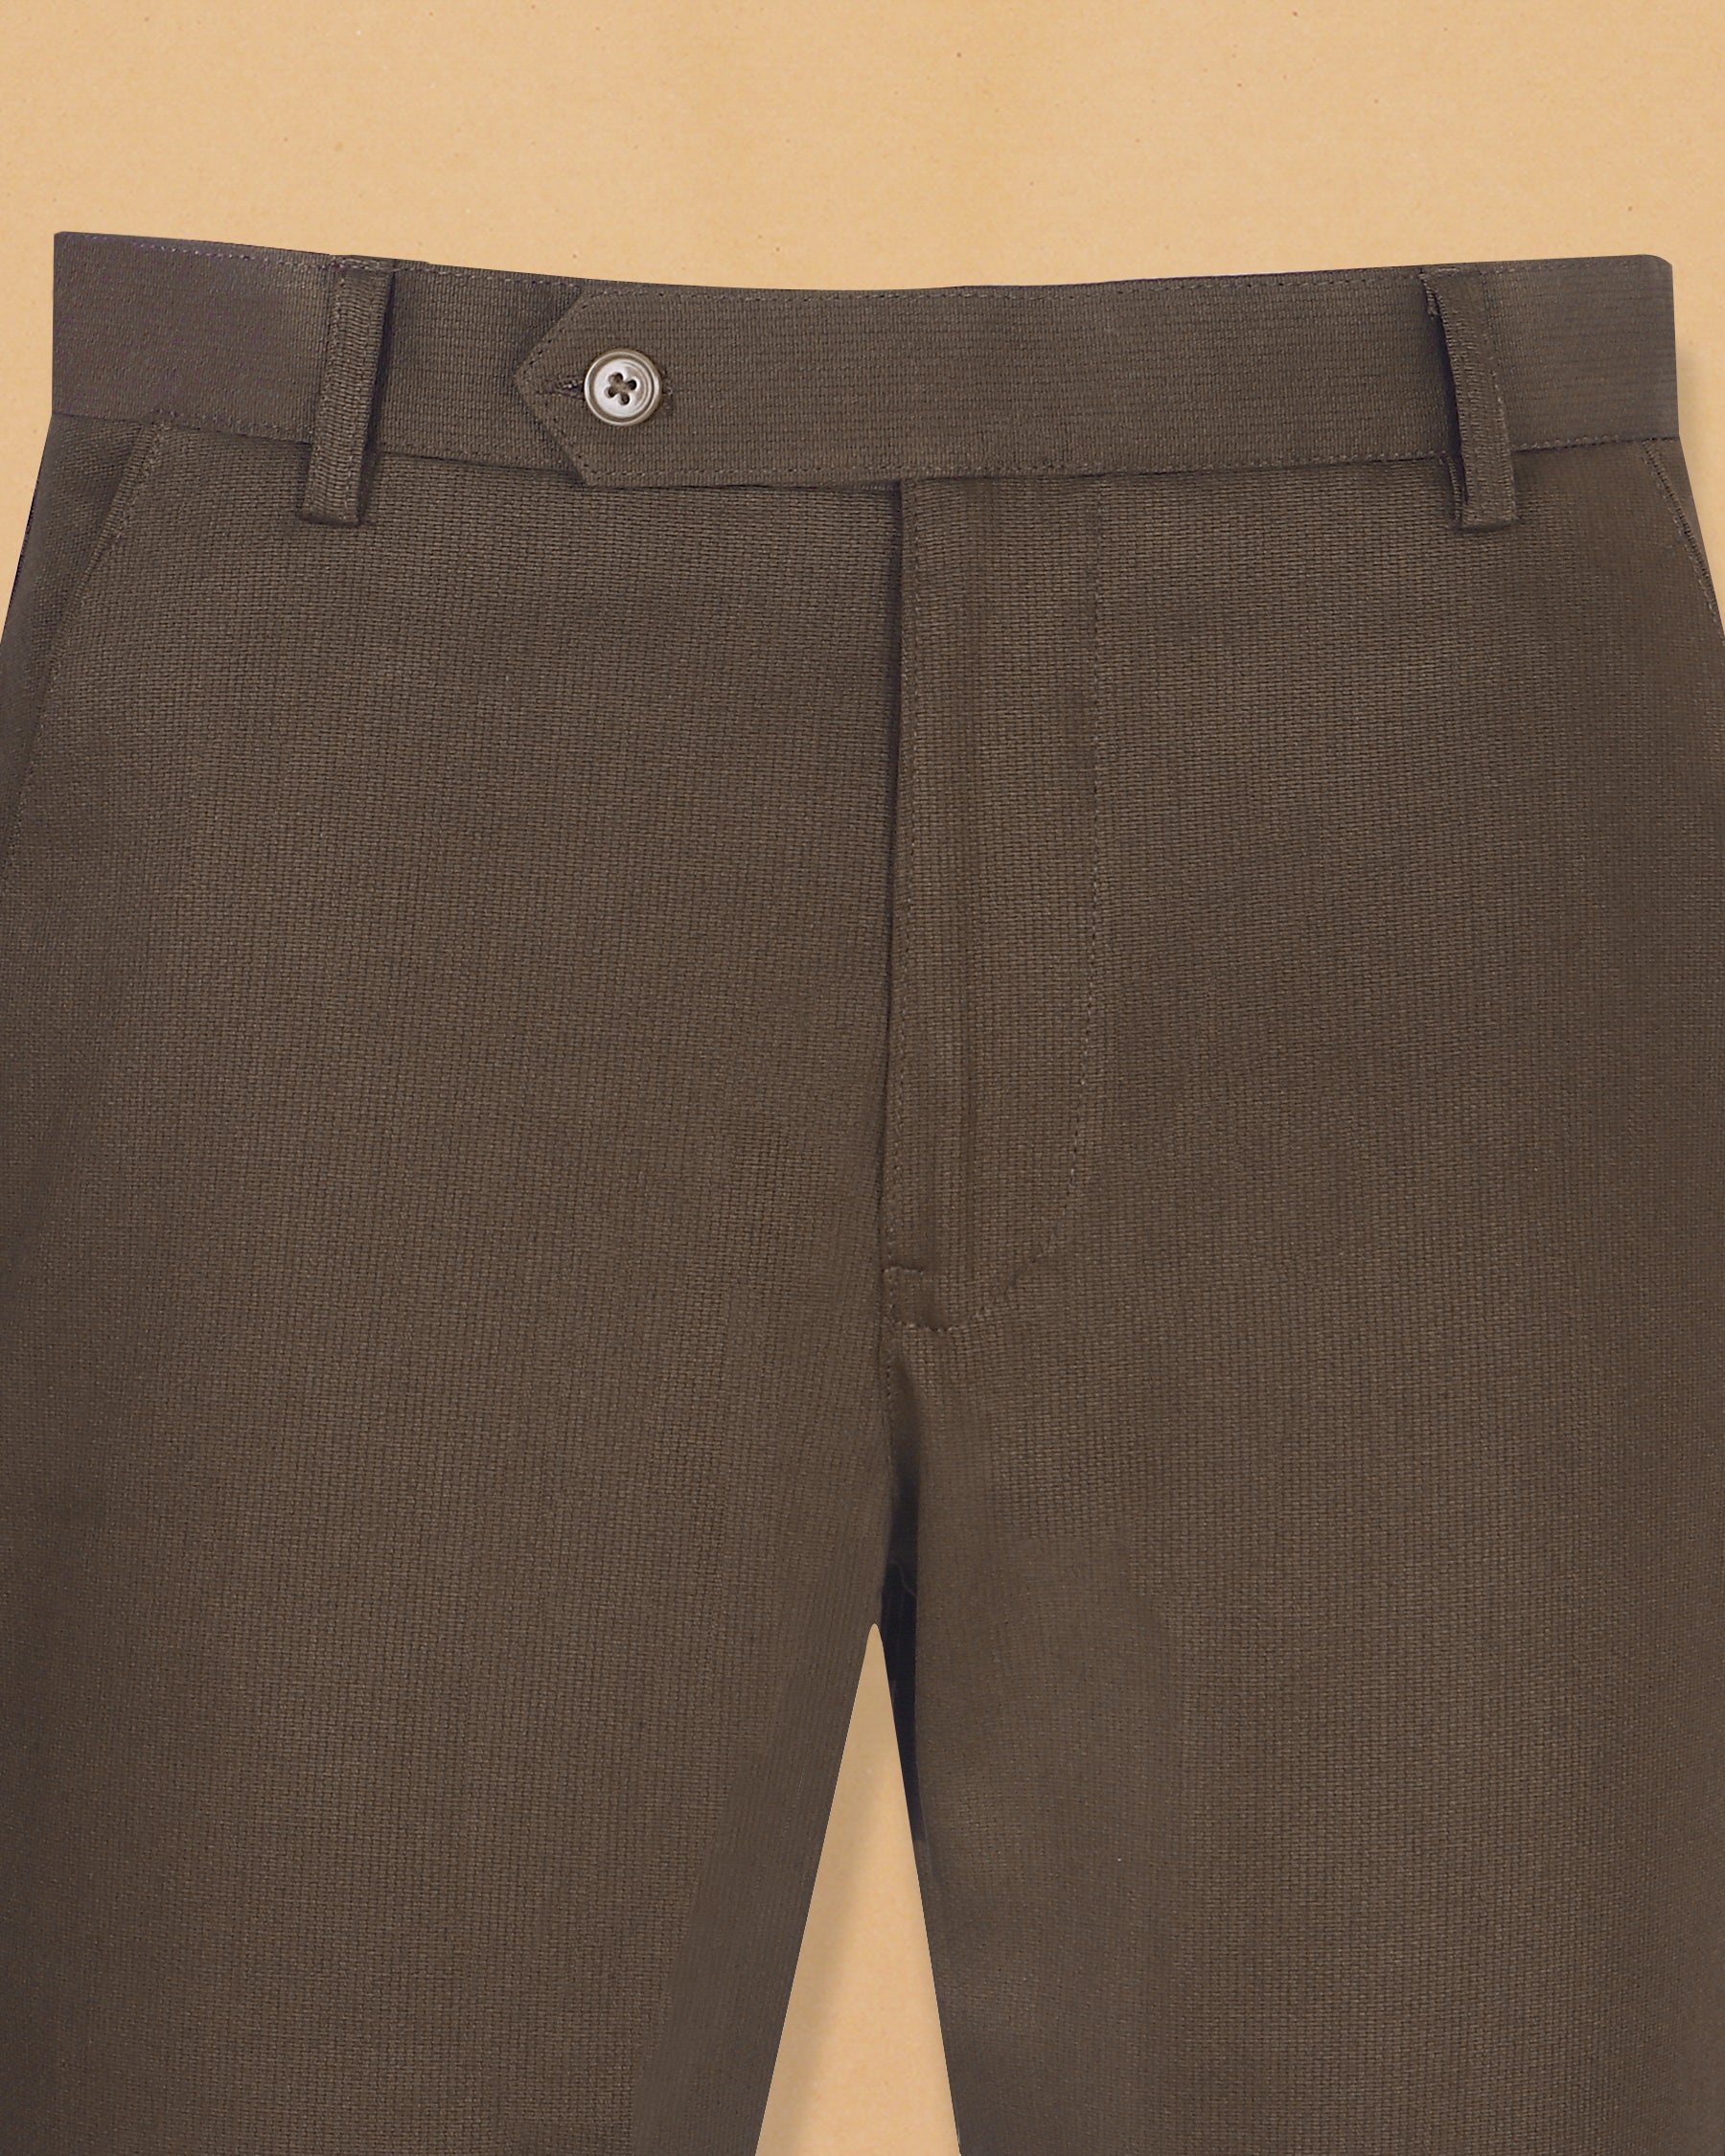 Mocha Brown Heavyweight regular fit Cotton Pant T355-28, T355-32, T355-30, T355-34